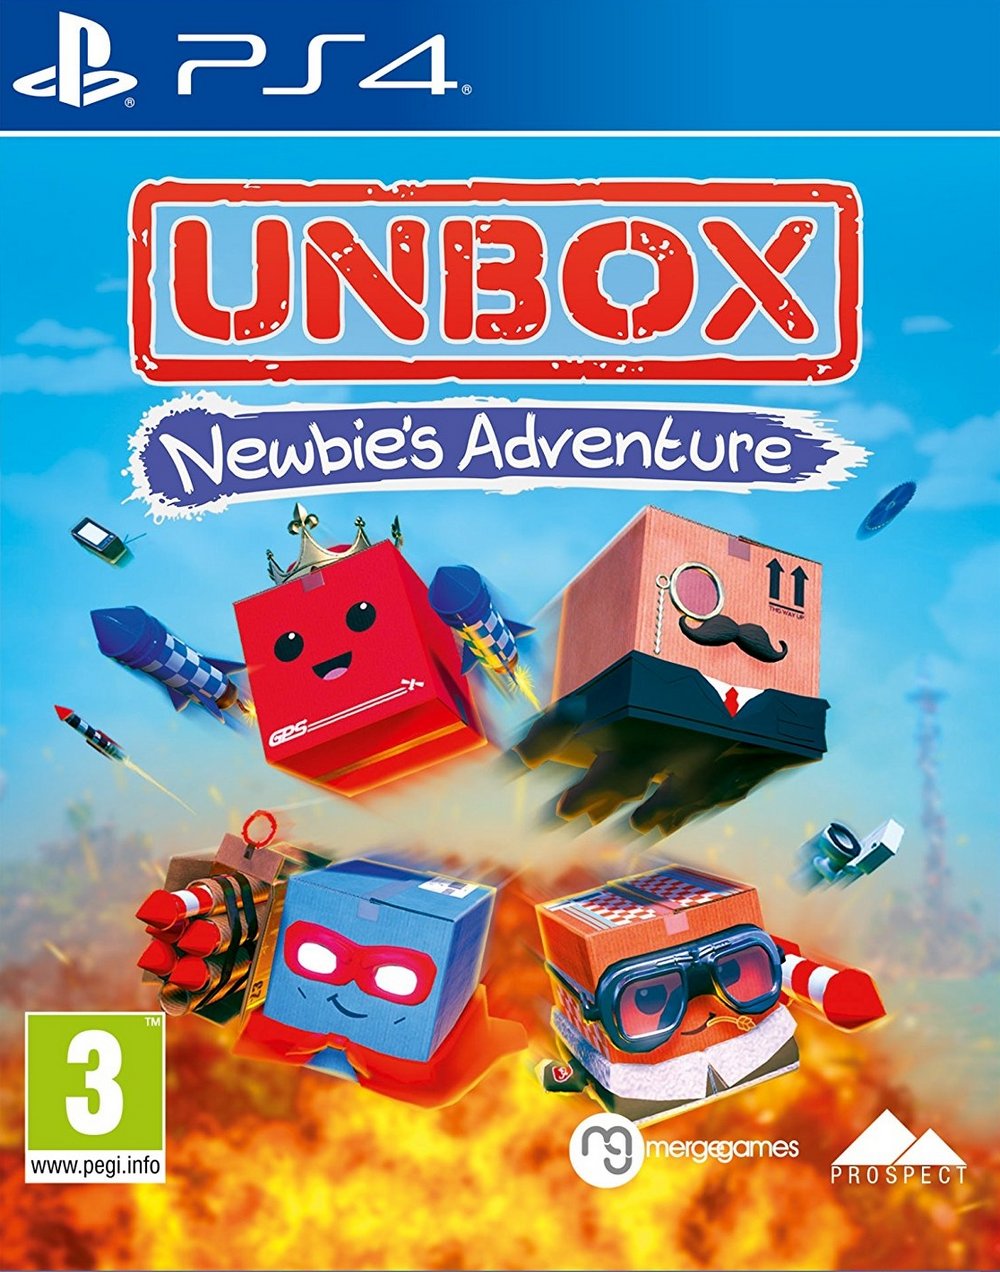 PS4 Unbox: Newbie's Adventure